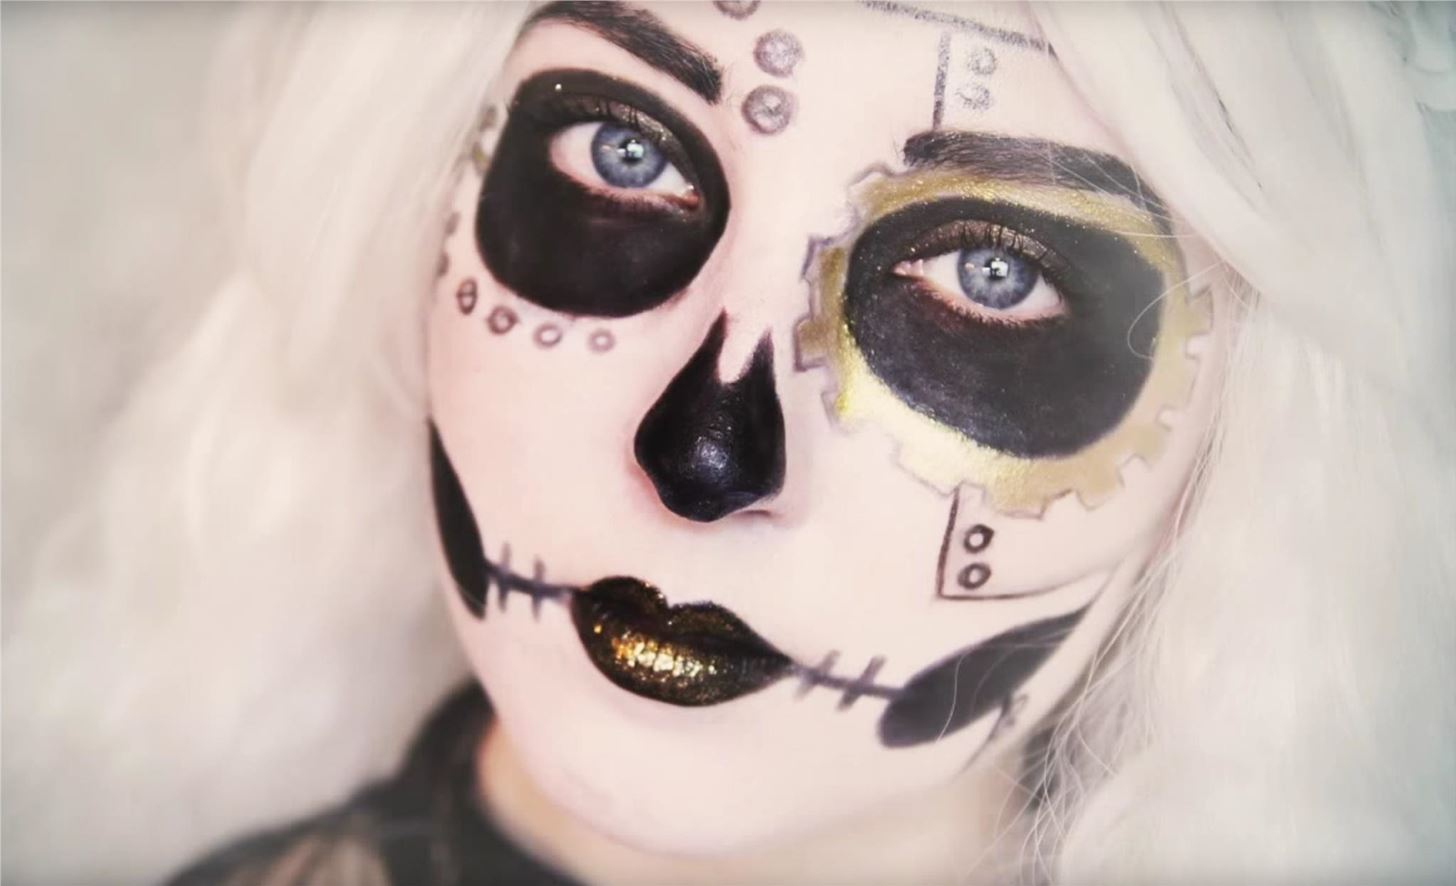 Halloween Eye Makeup Designs The 15 Best Sugar Skull Makeup Looks For Halloween Halloween Ideas